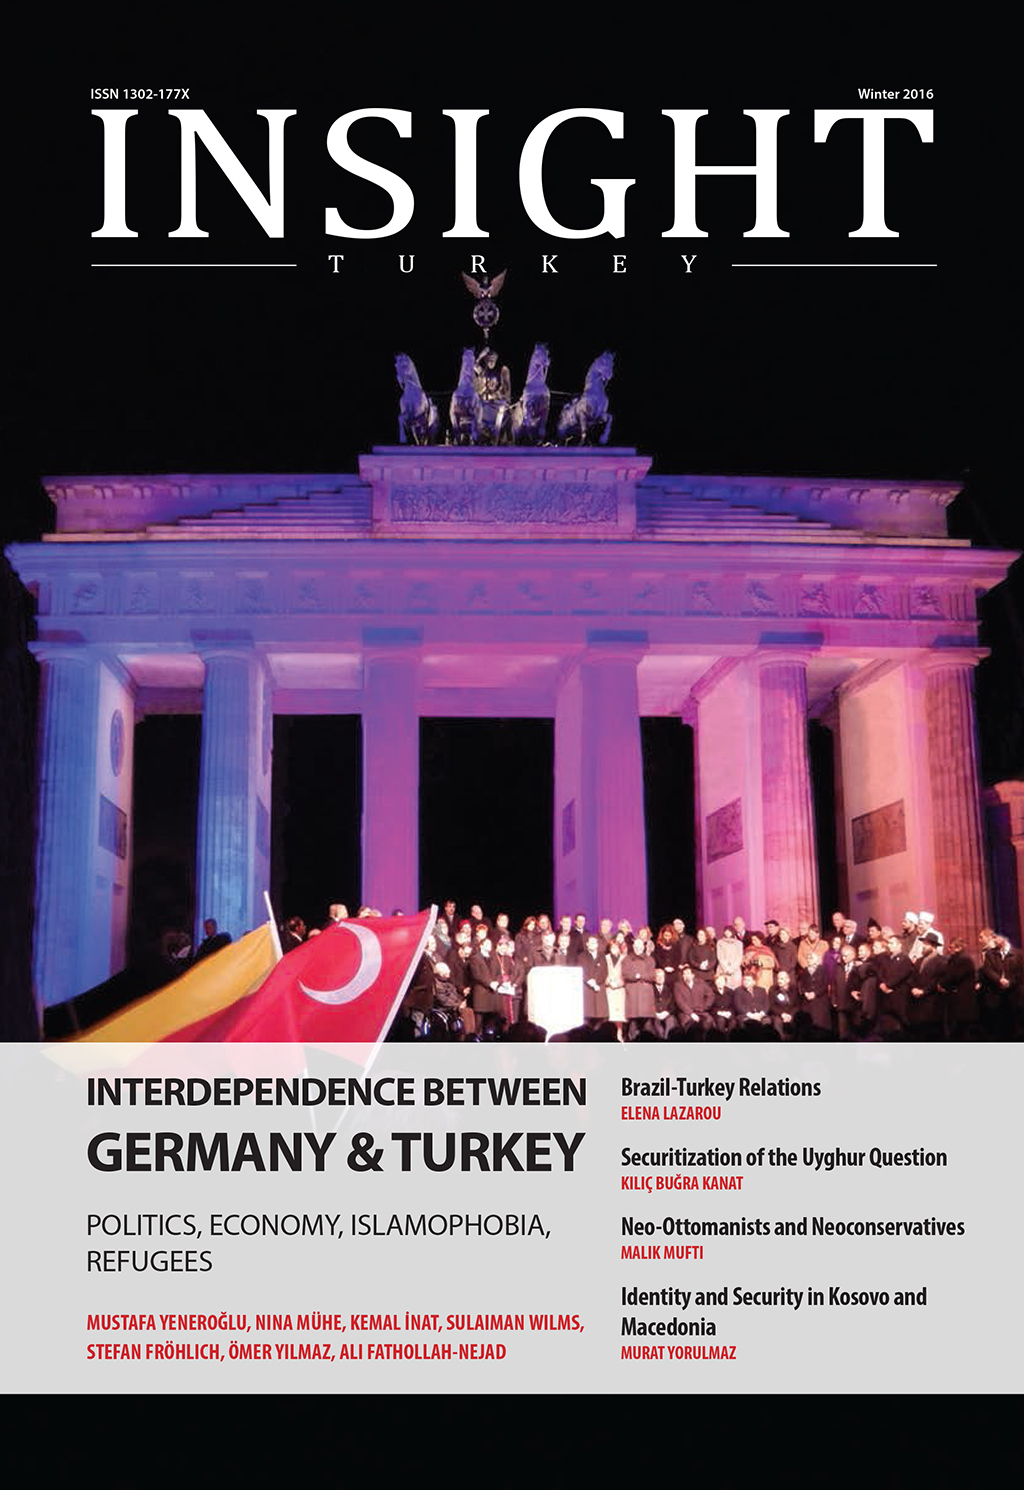 Interdependence between Germany amp Turkey